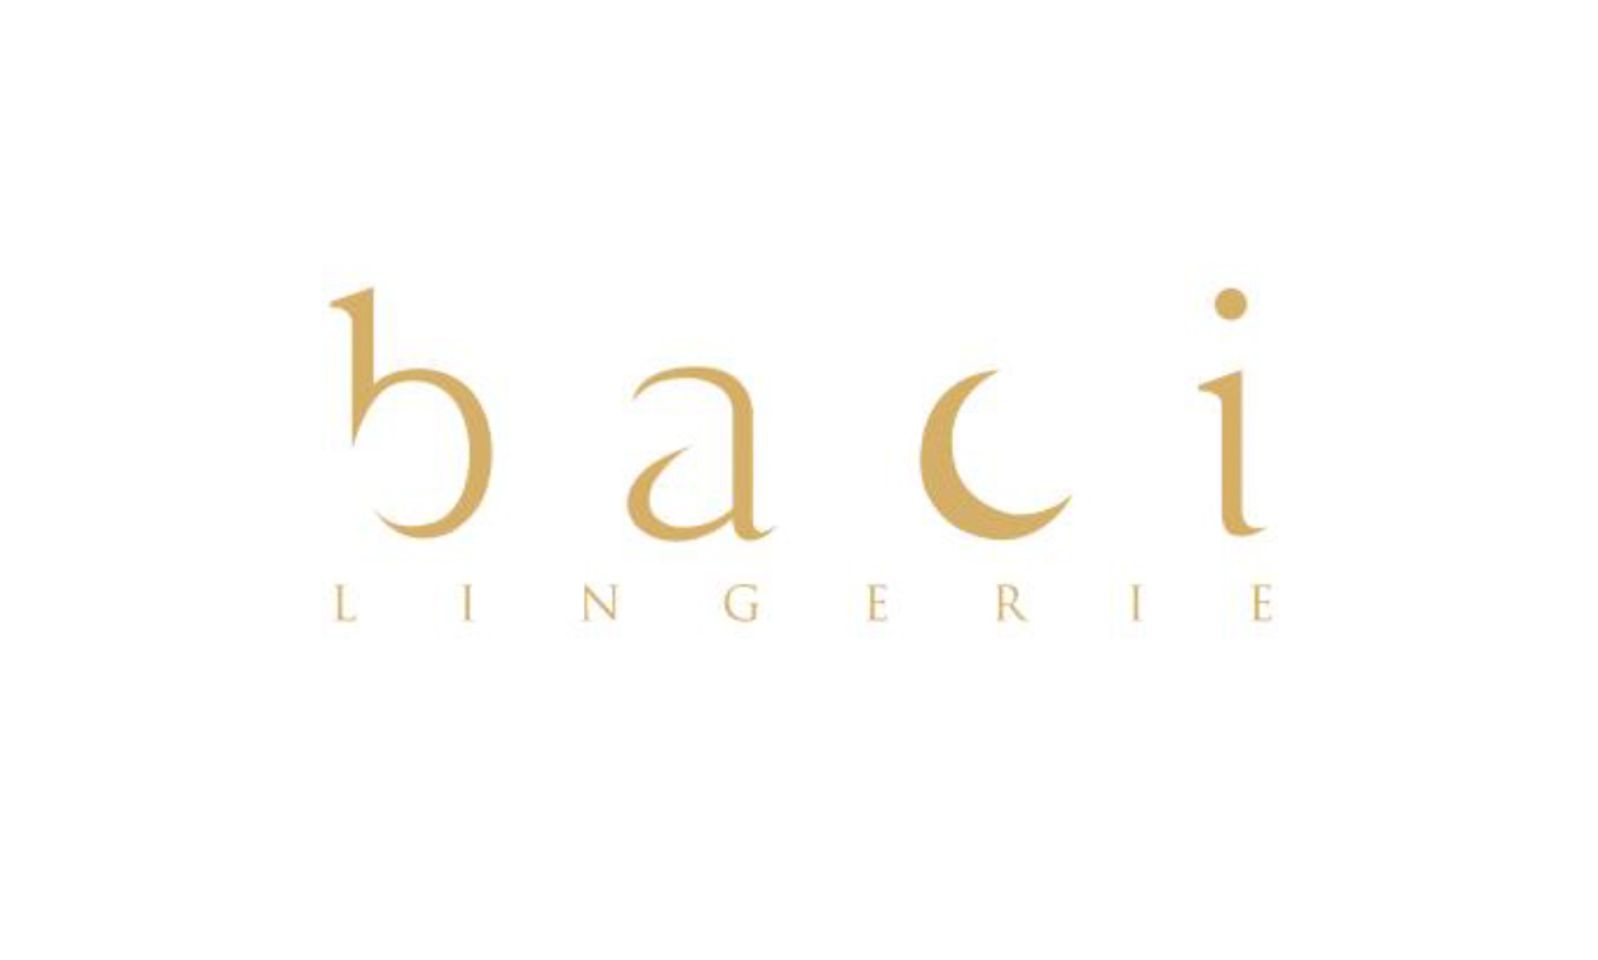 Baci Lingerie to Exhibit at ILS 2012 in Las Vegas